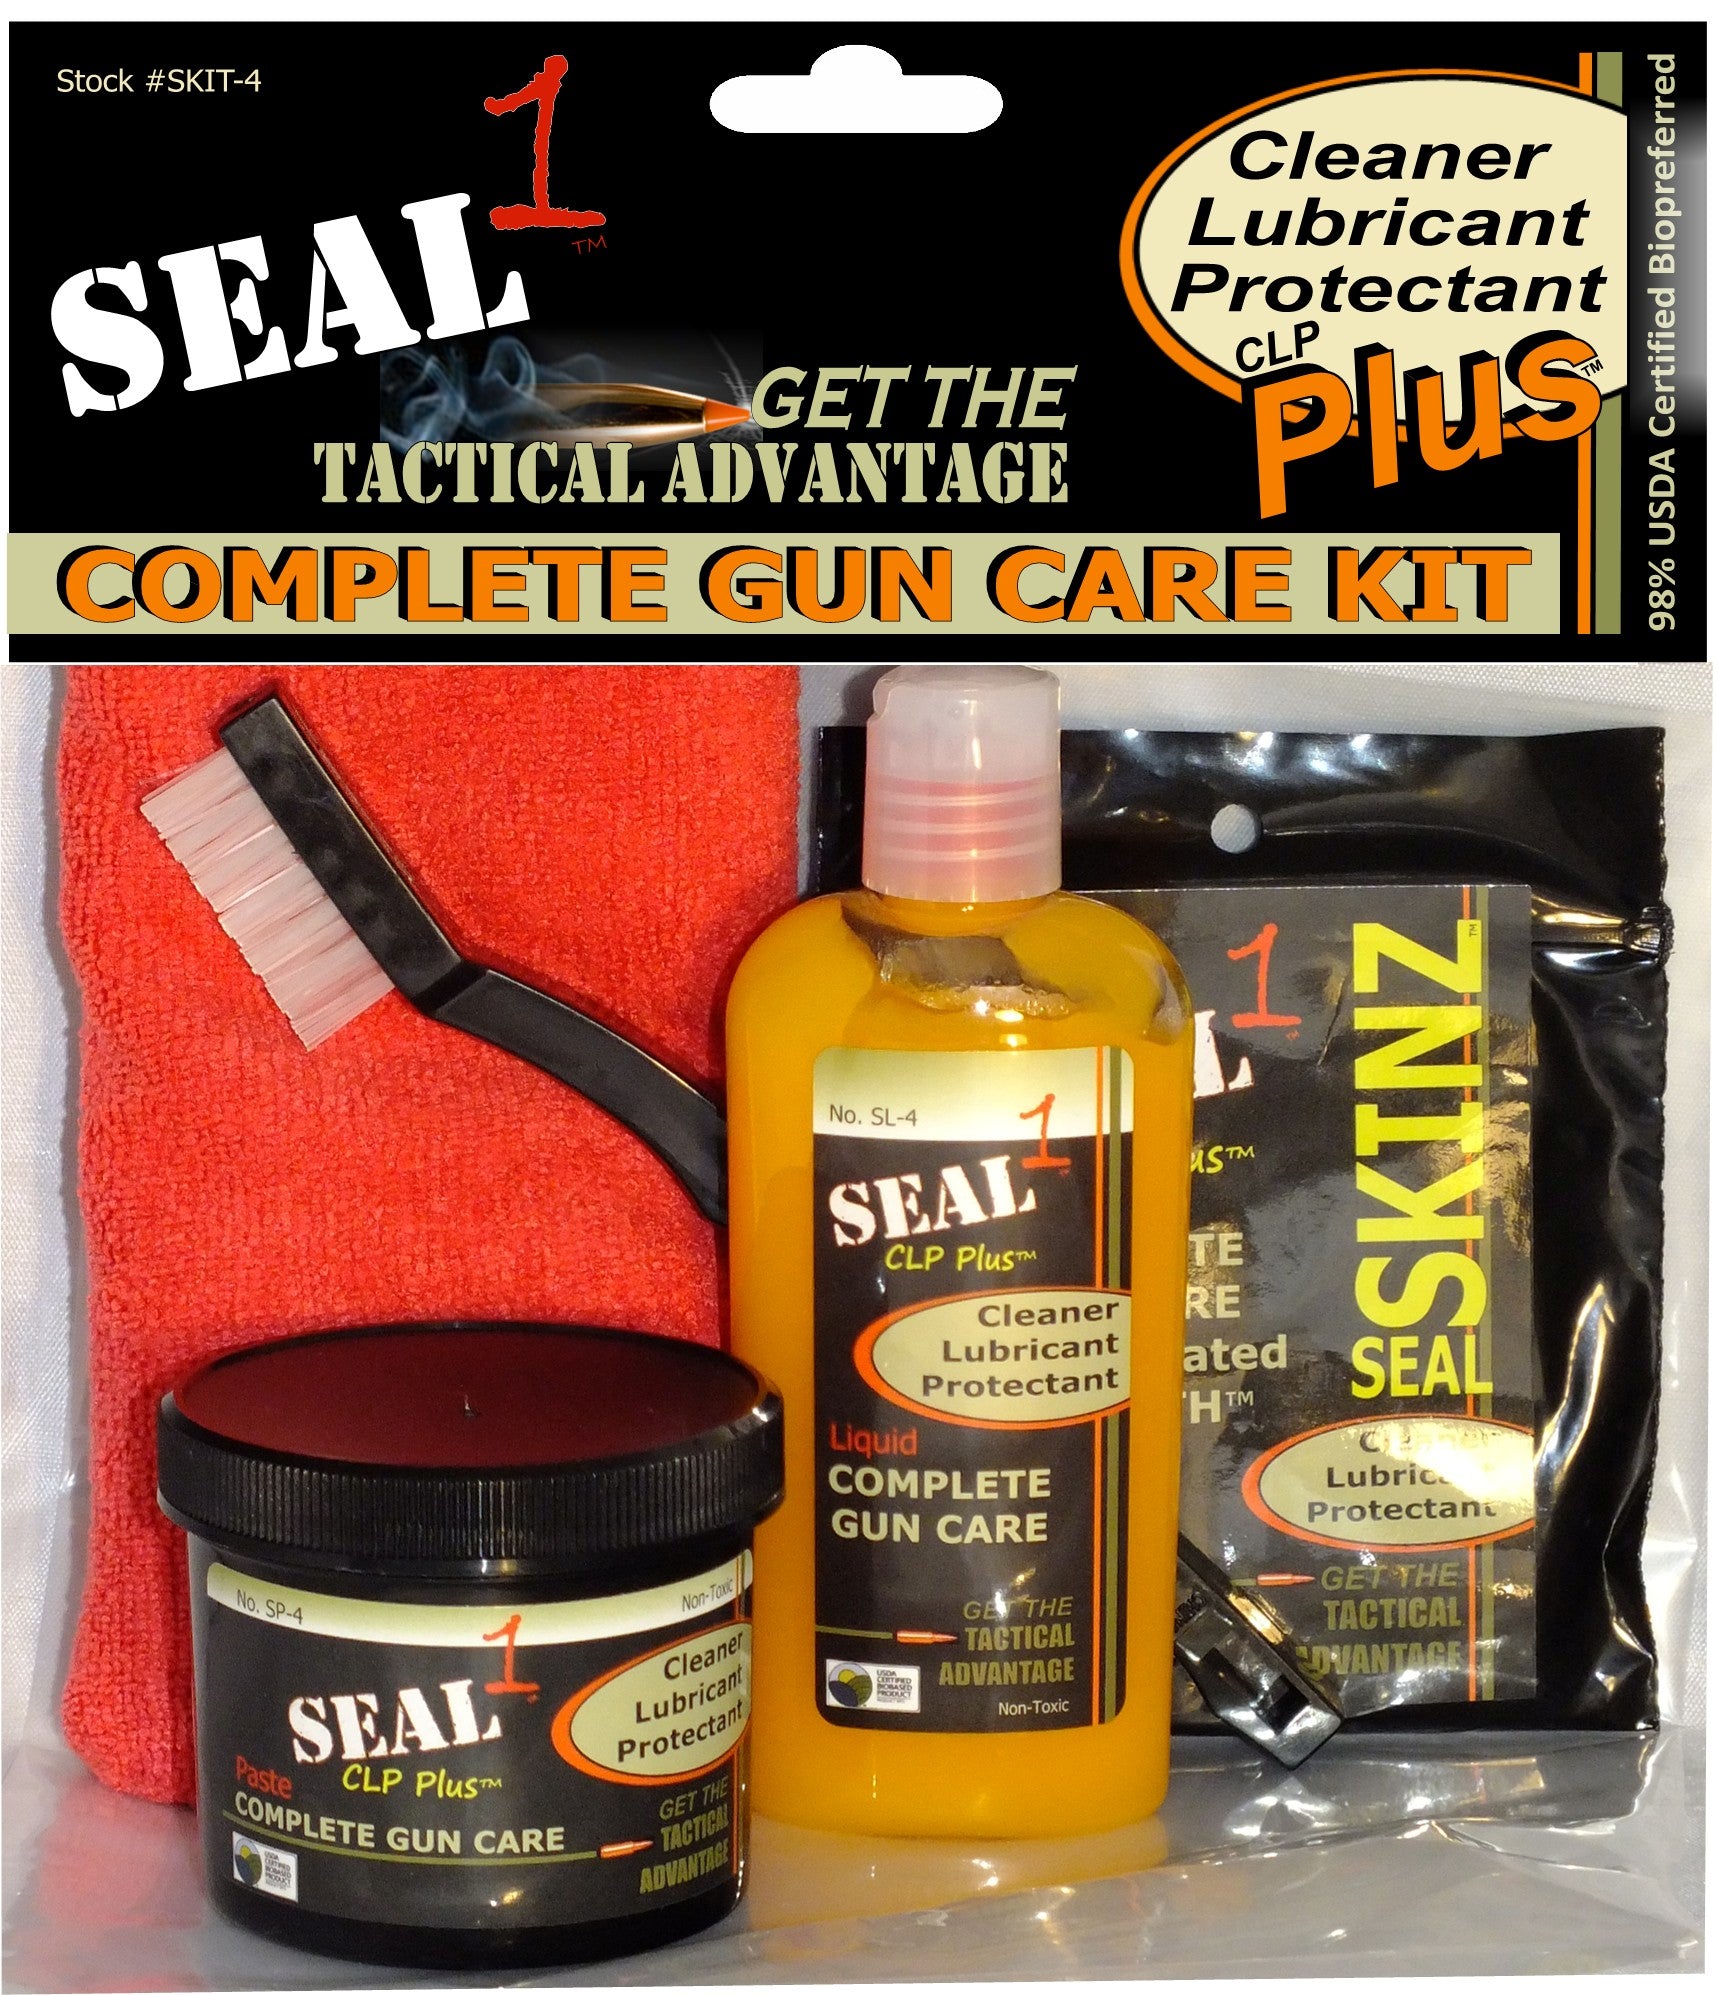 SEAL 1™ Complete Gun Care Kit